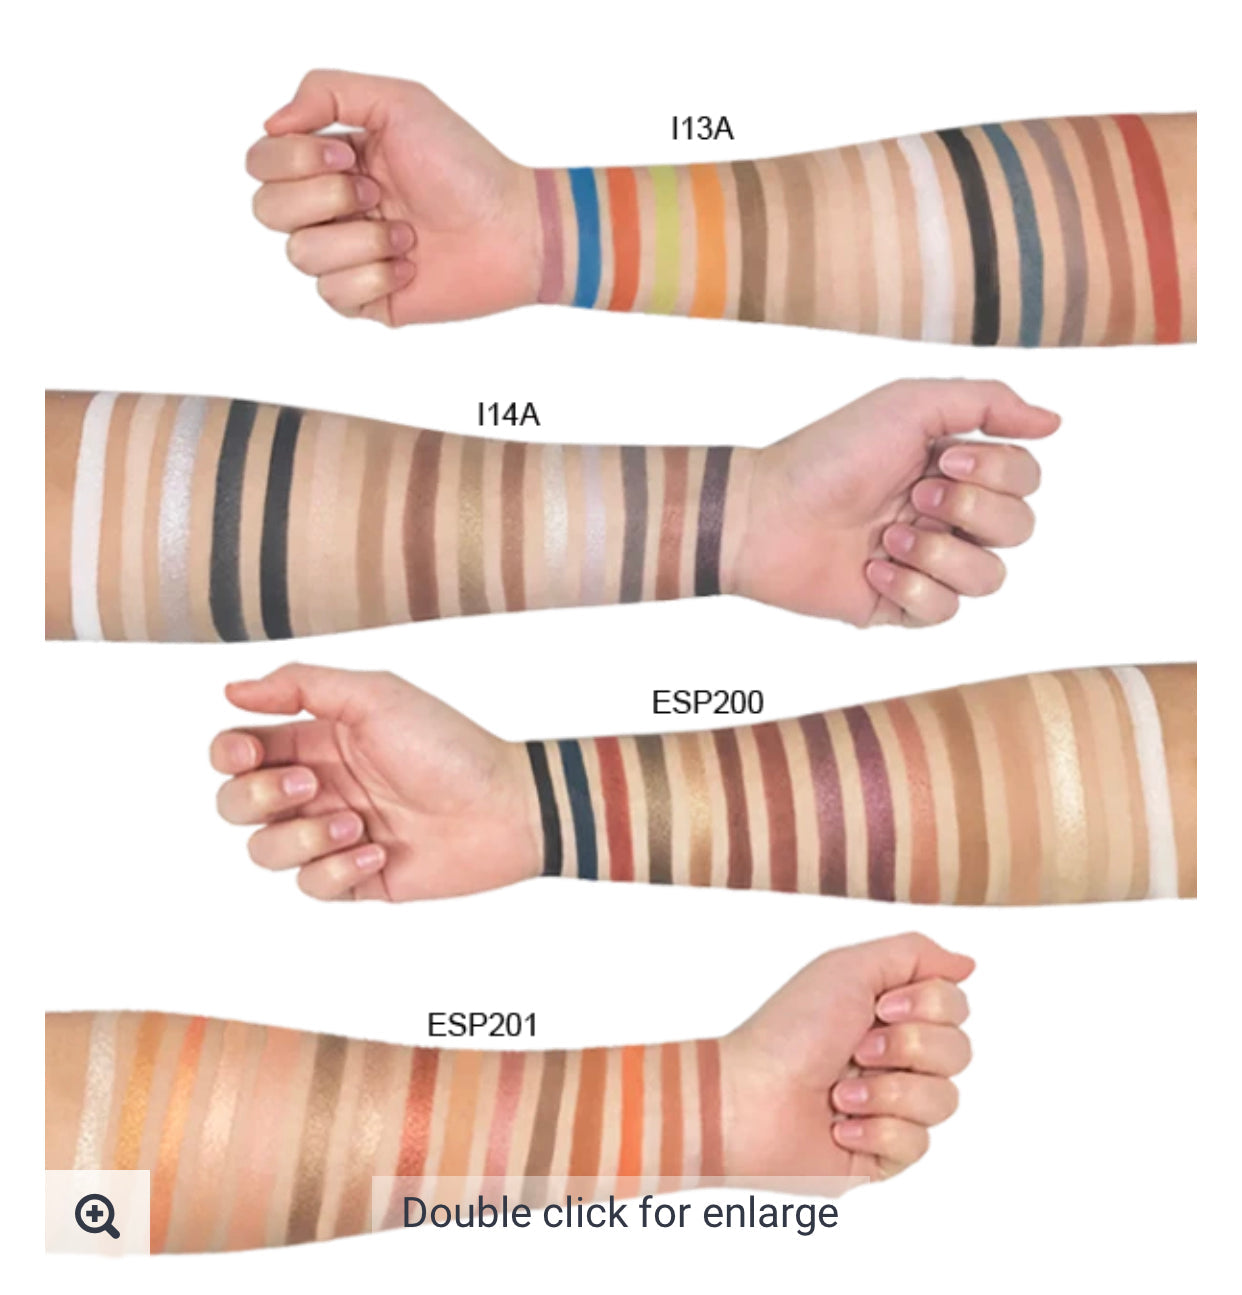 15 Shade Eyeshadow Palette